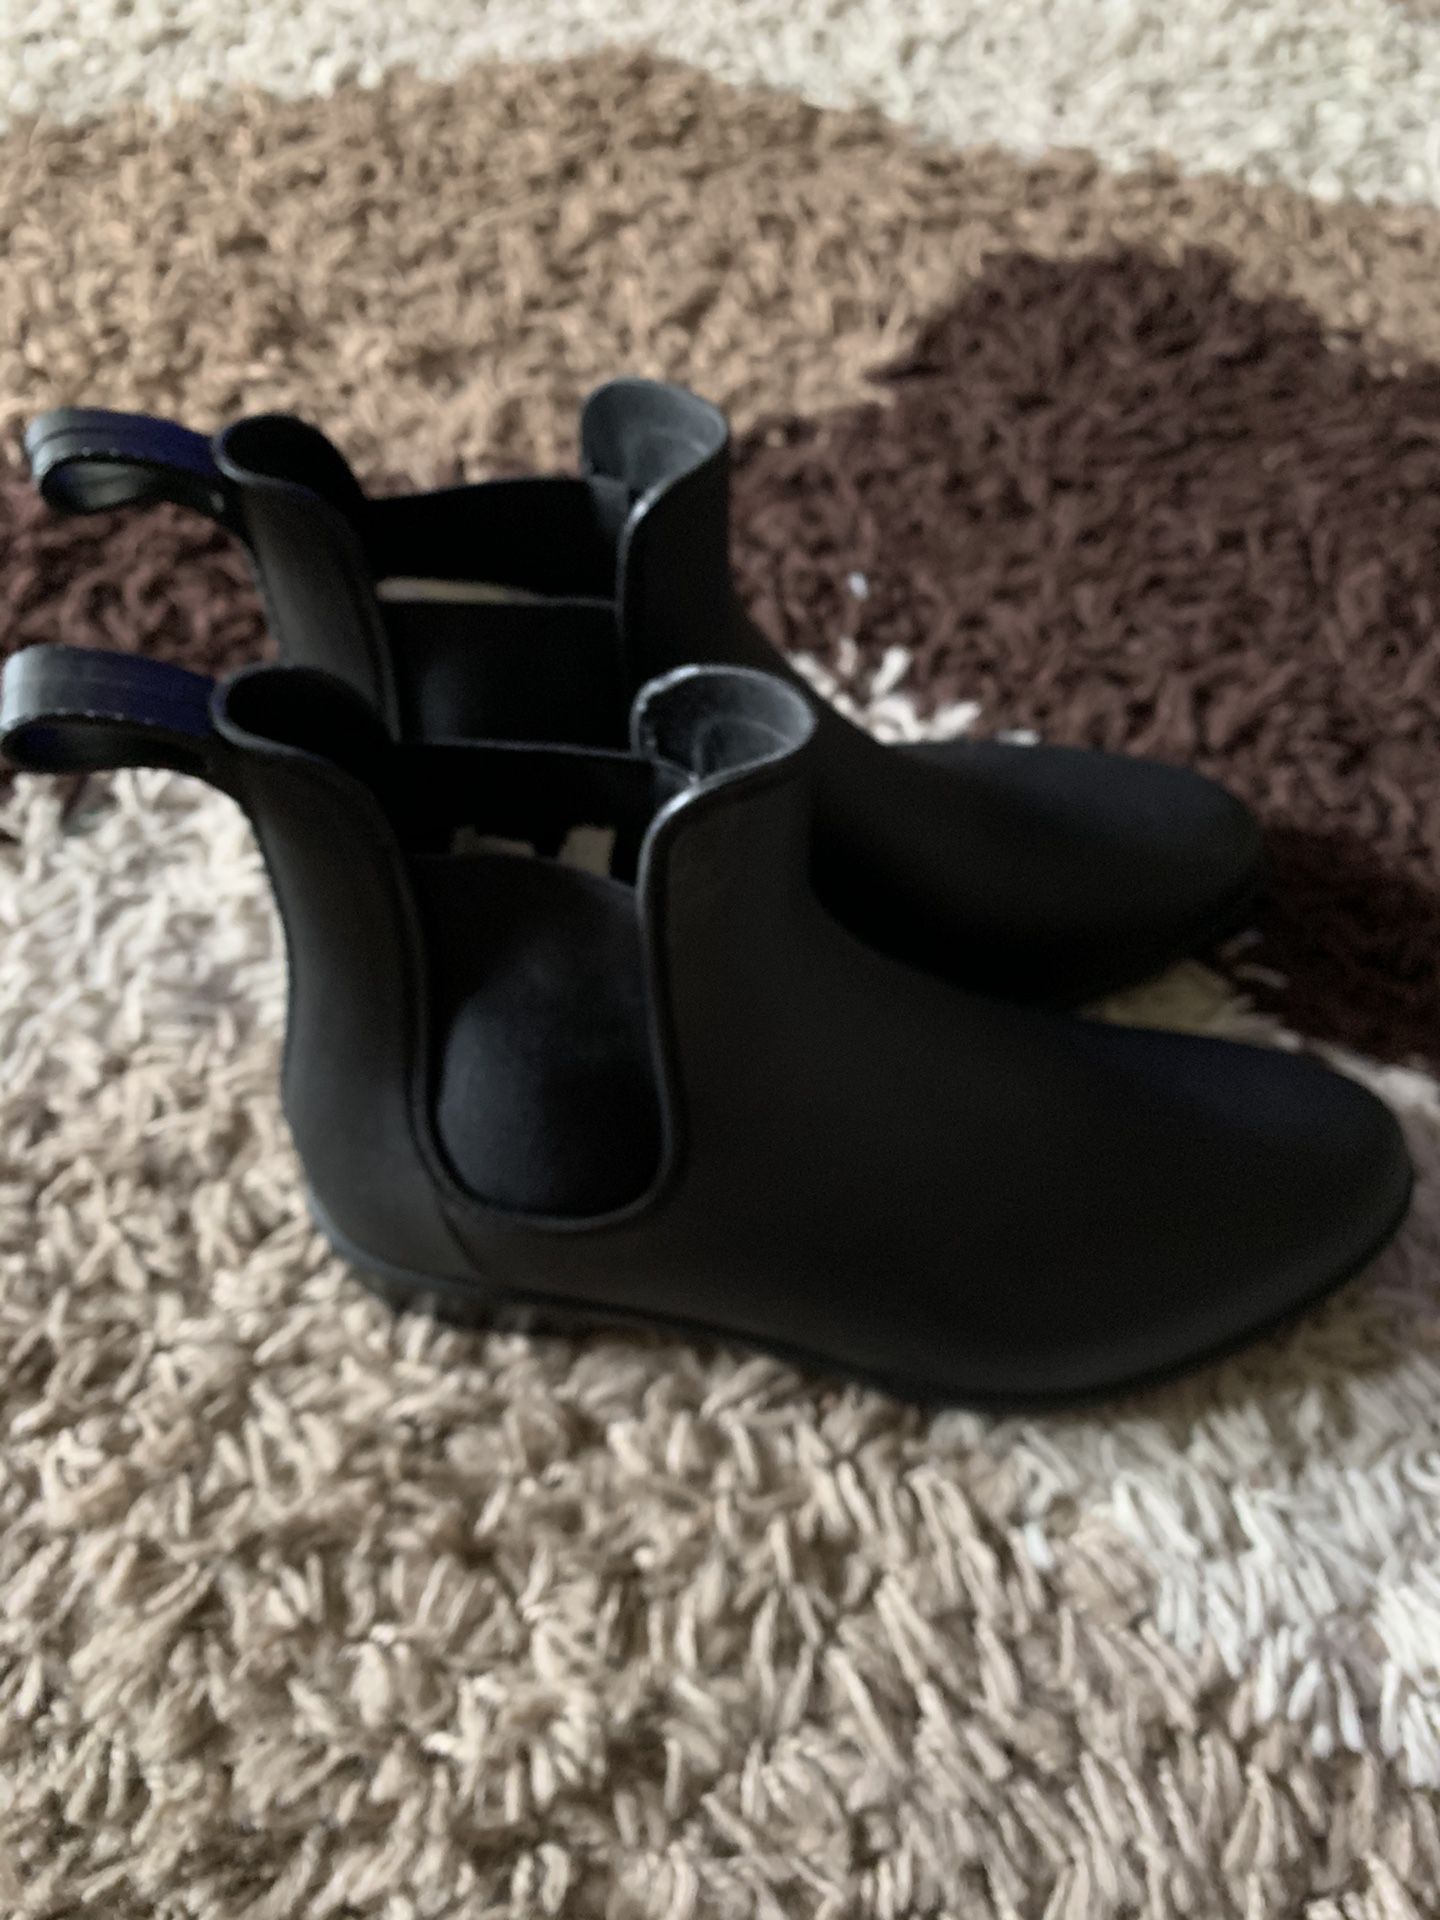 Women’s size 11 rain boots